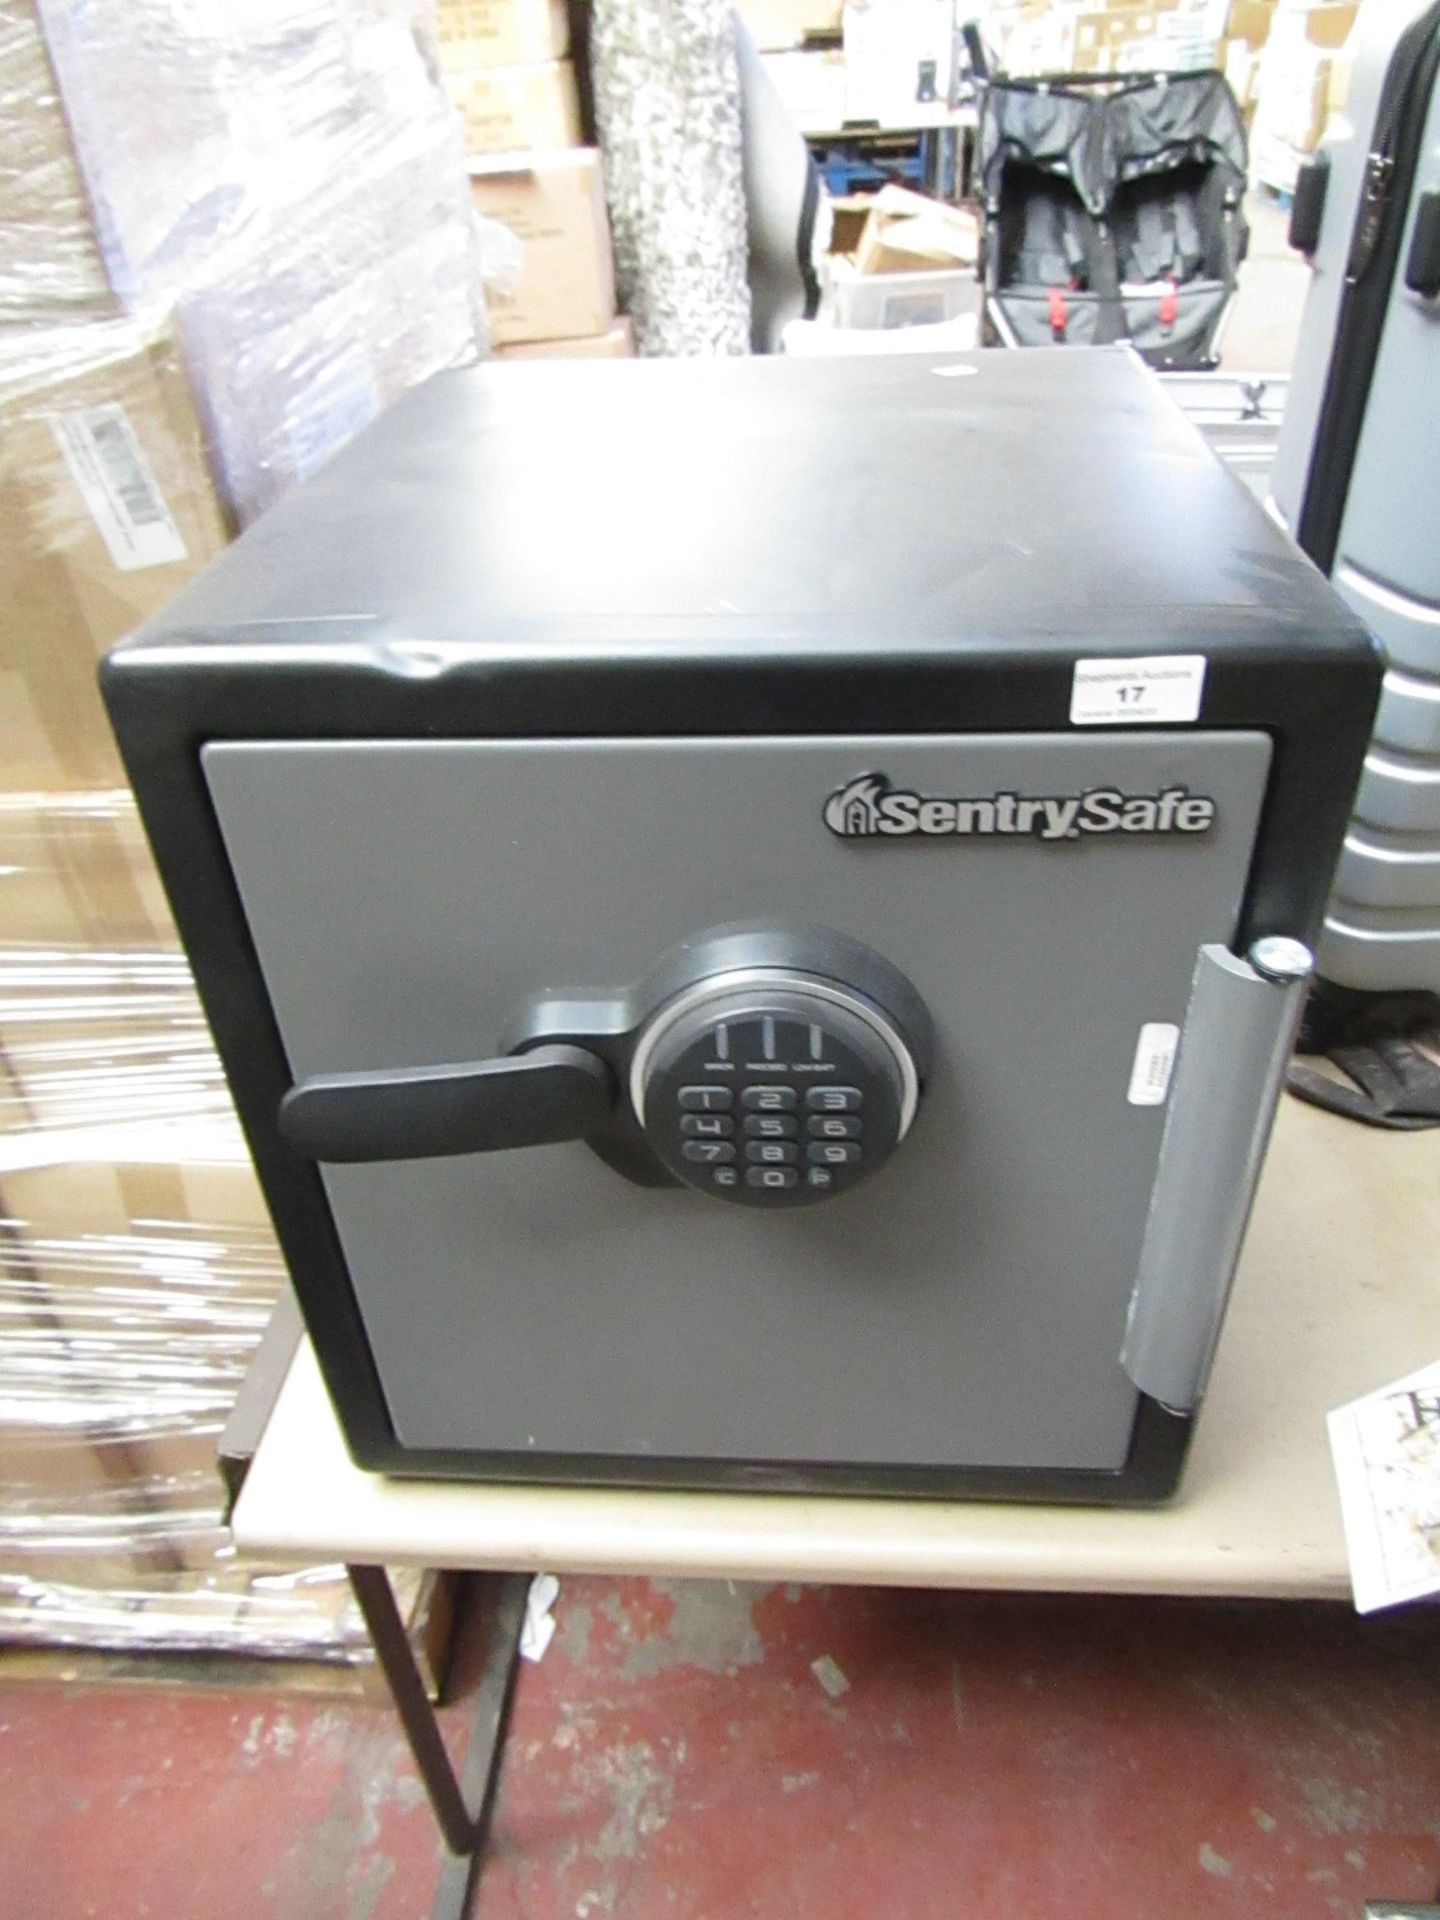 Sentry Safe, digital home safe, no keys and the item is locked.